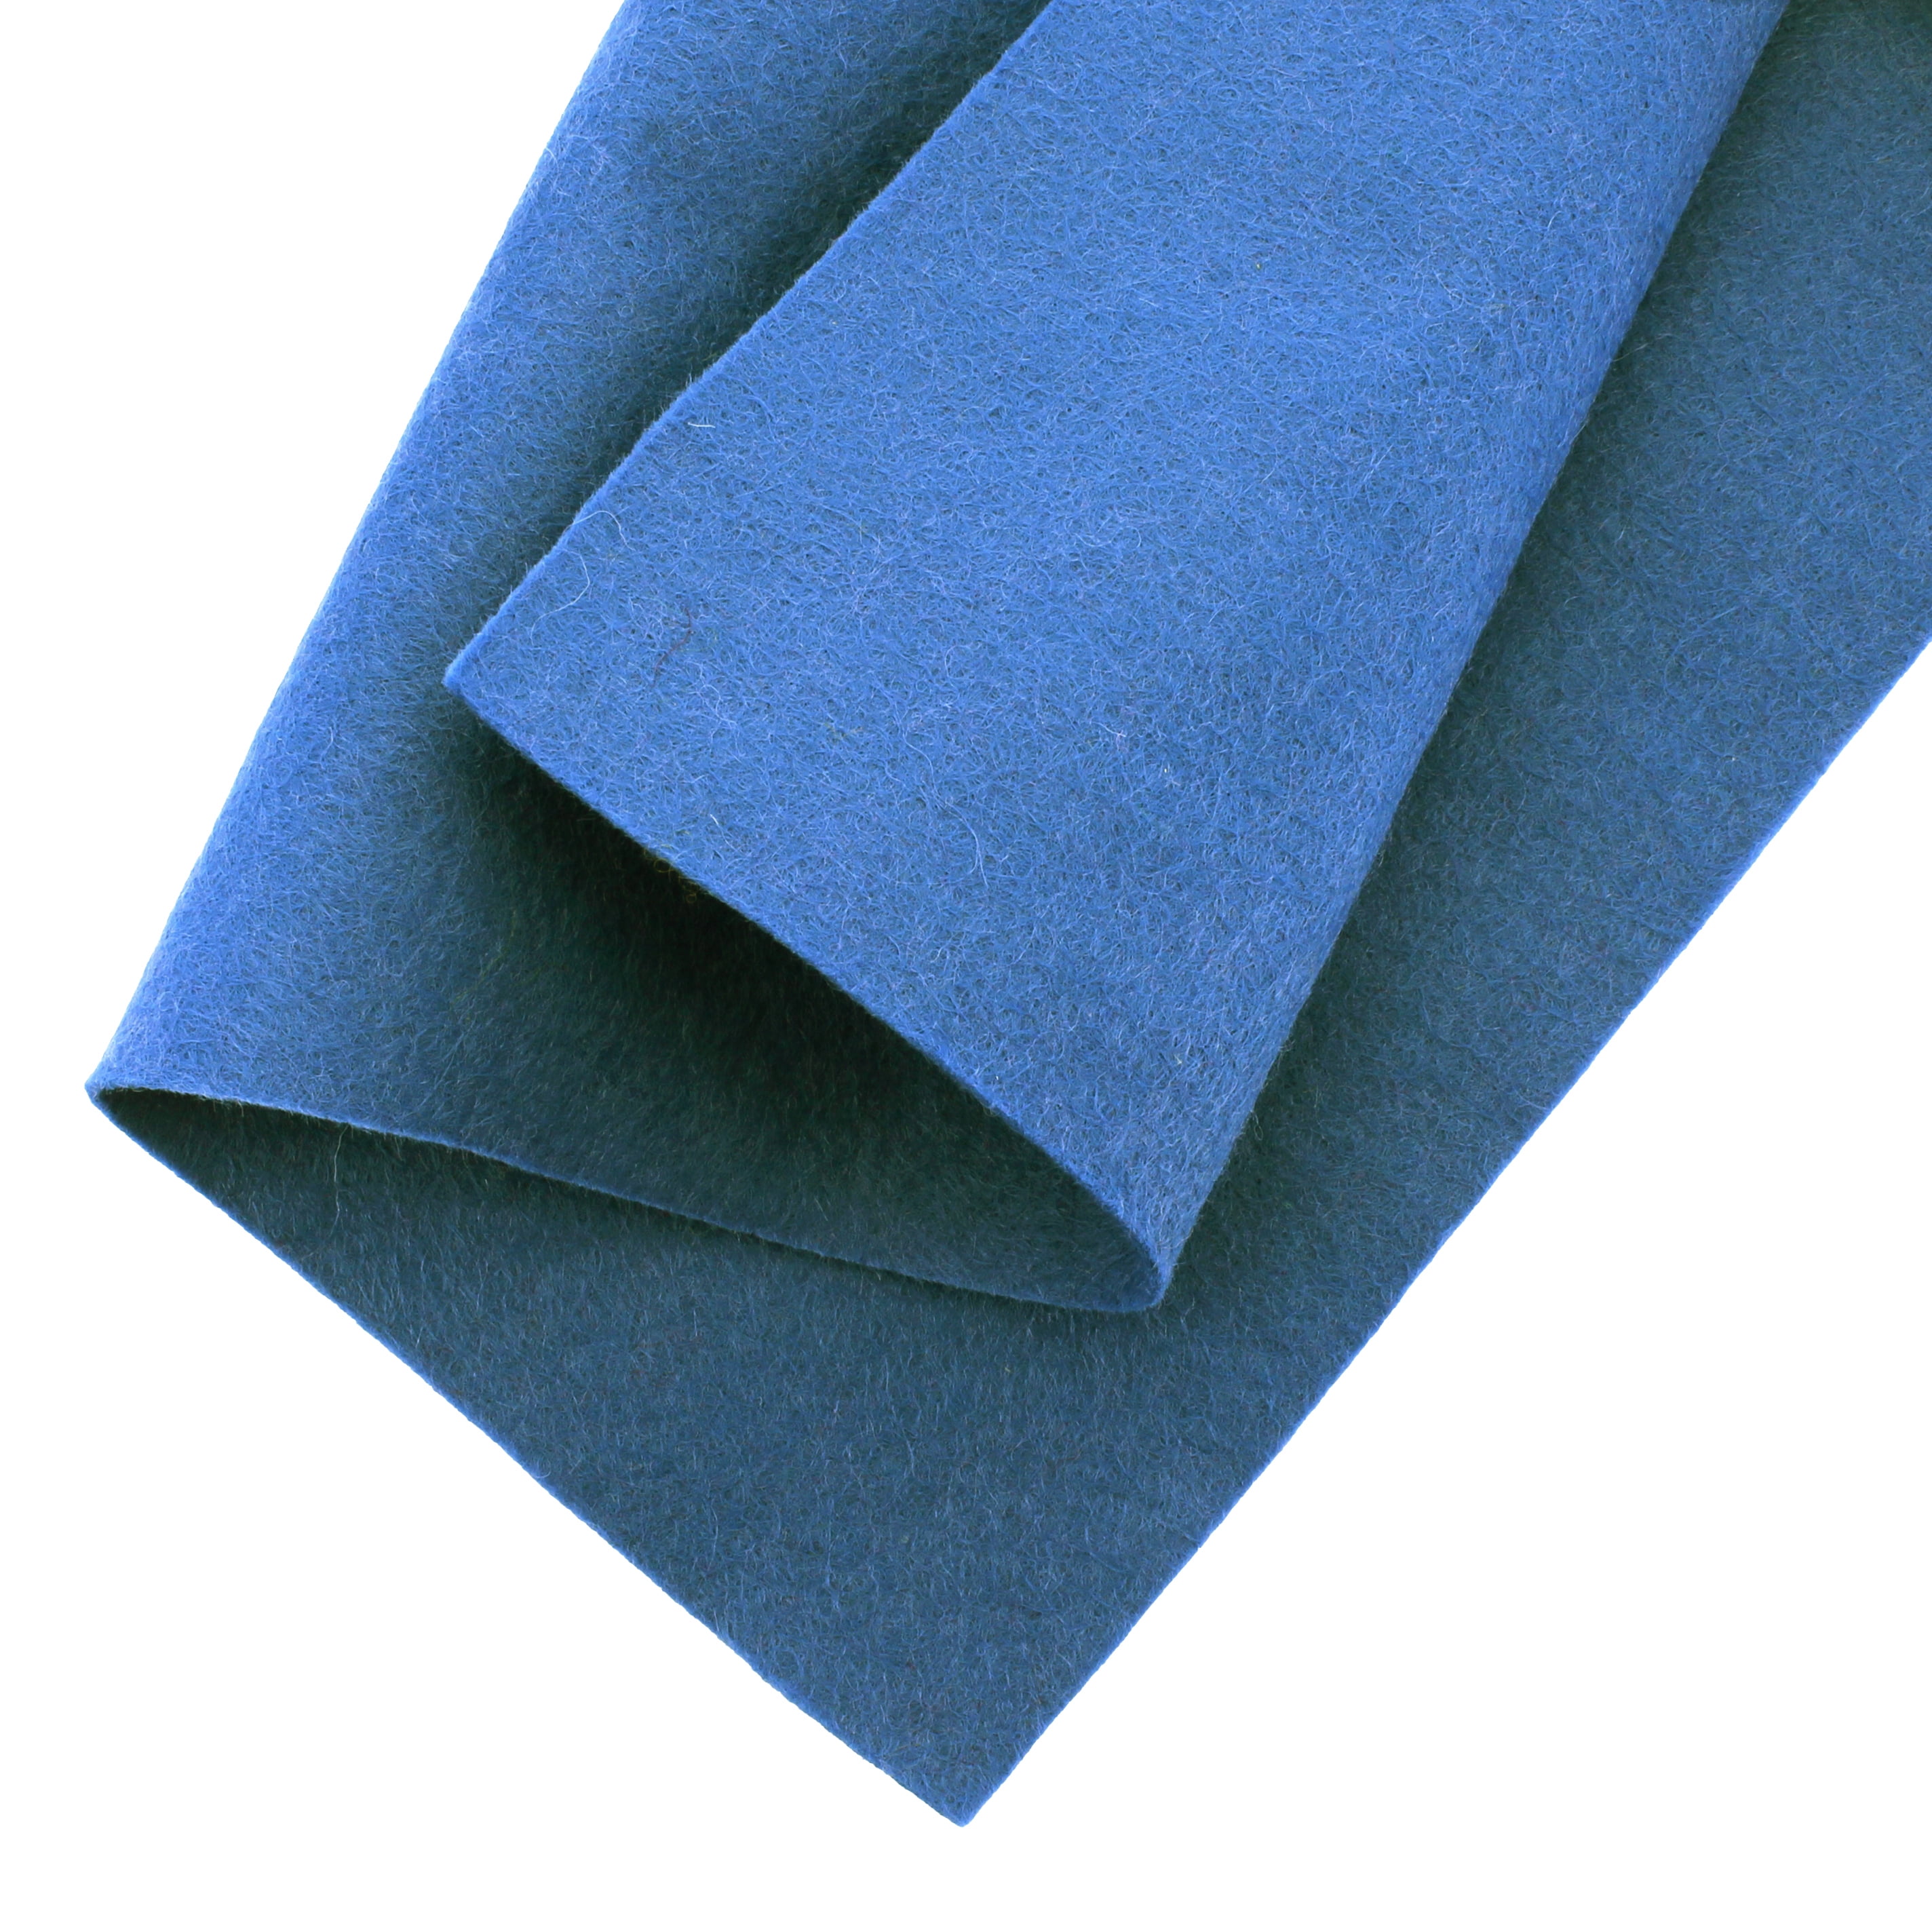 Felt Fabric - Mid Blue, Sewing & Knitting Supplies